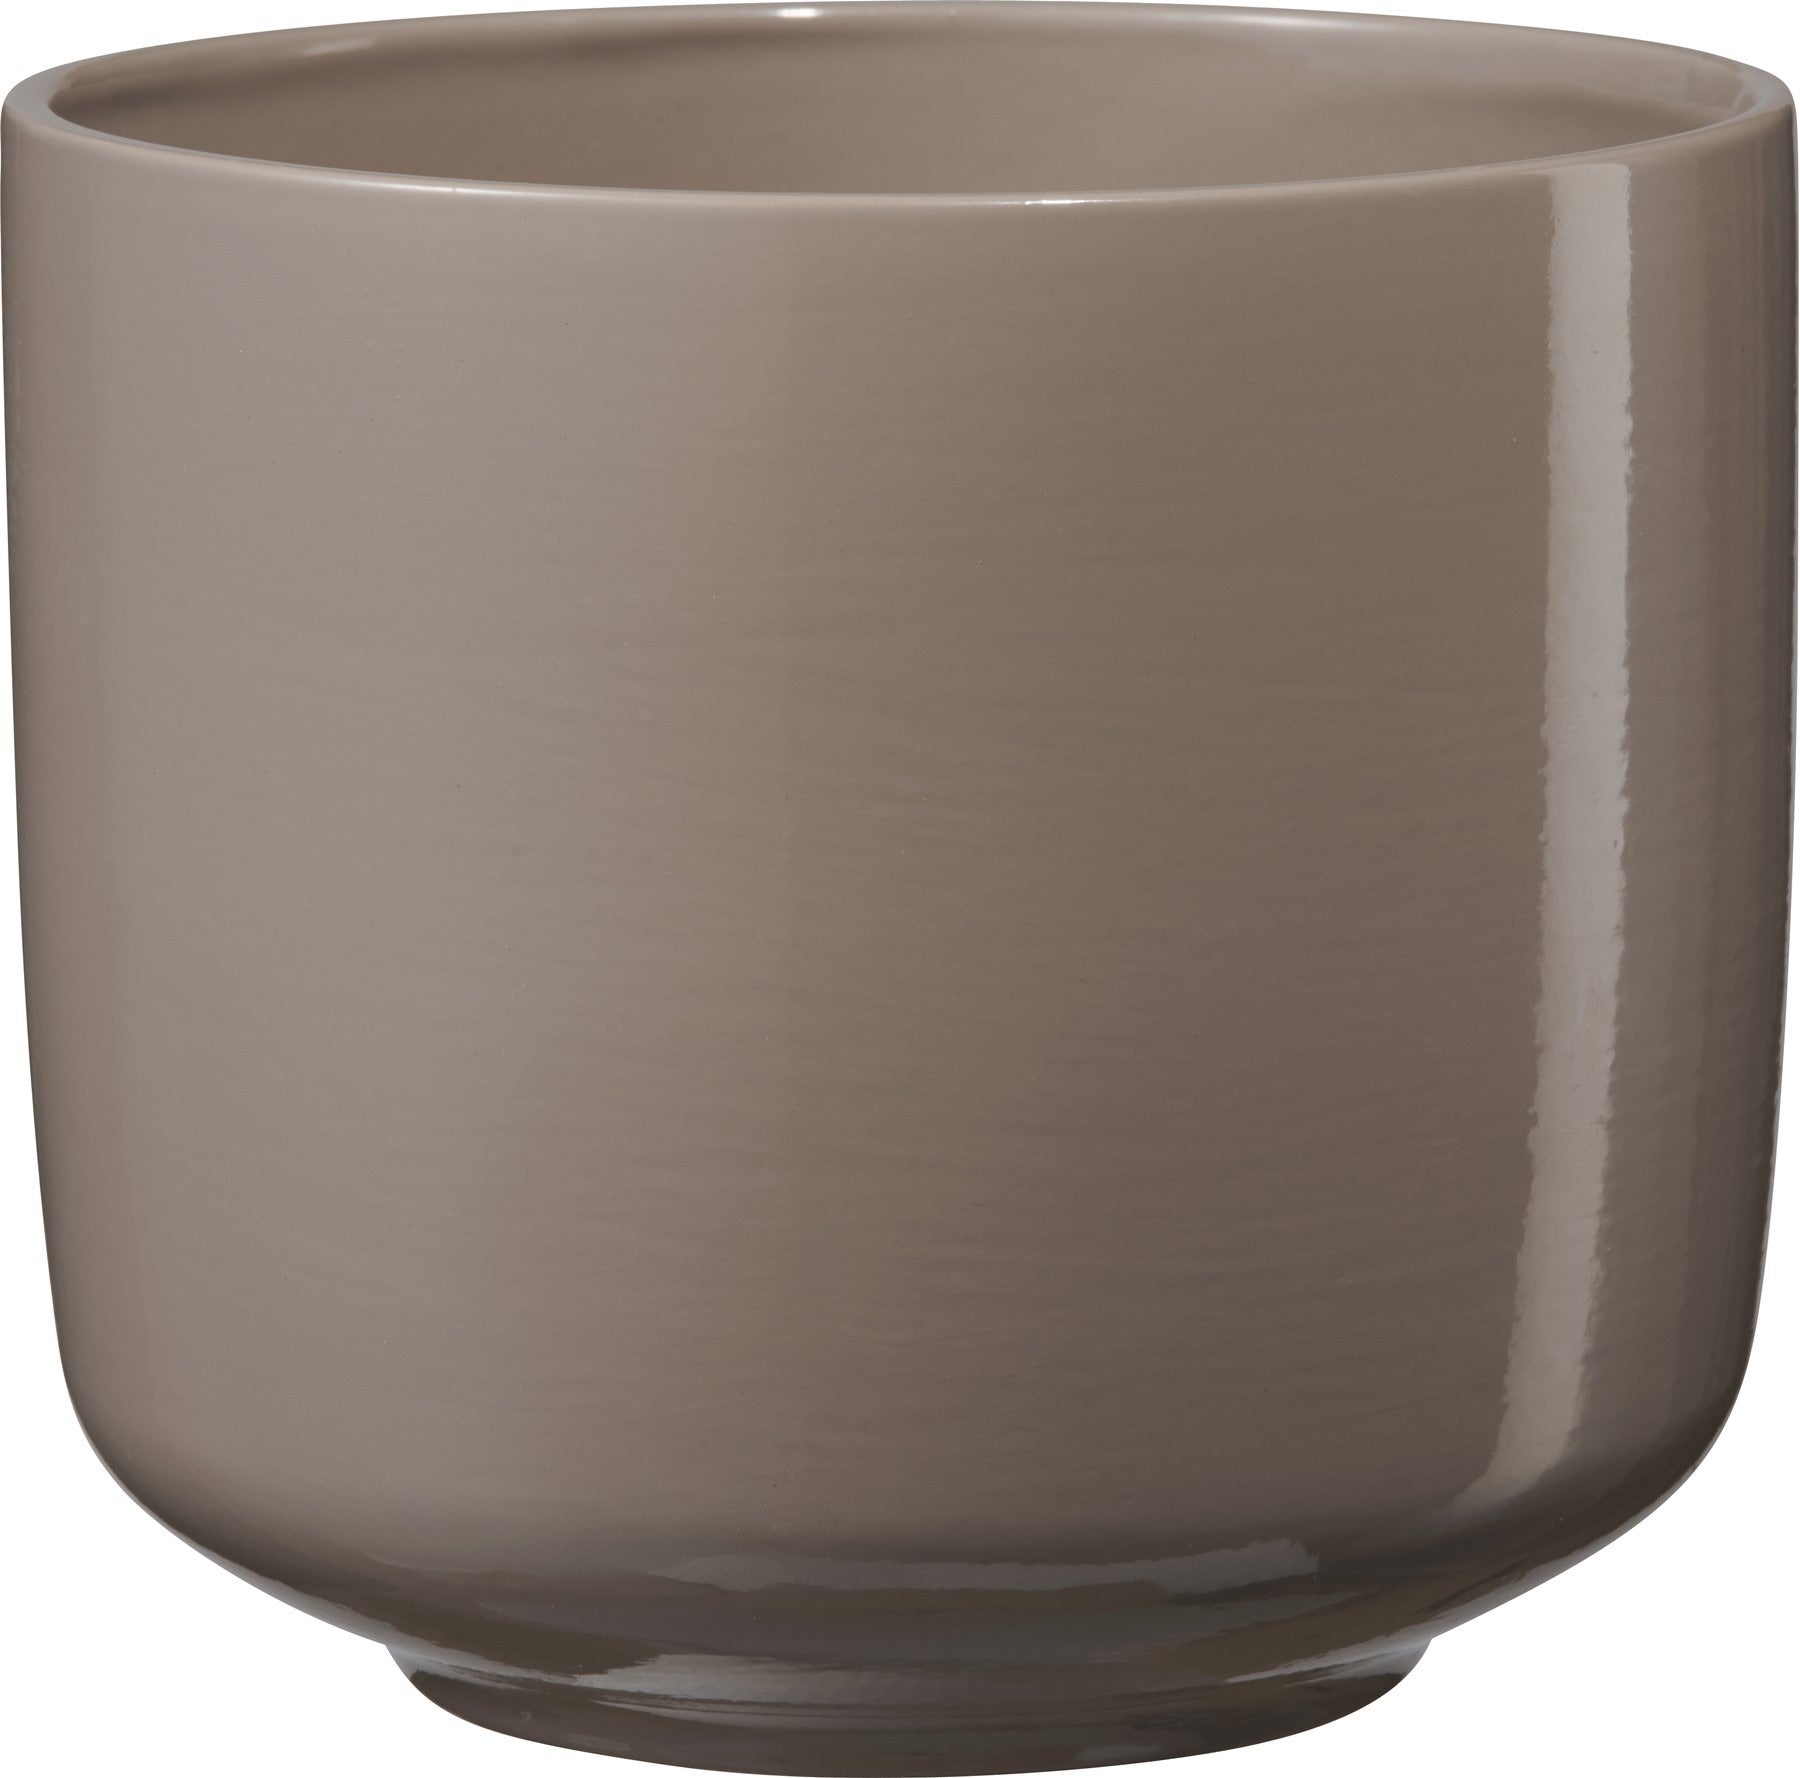 View Bari Ceramic Pot GreyBeige 13cm x 12cm information